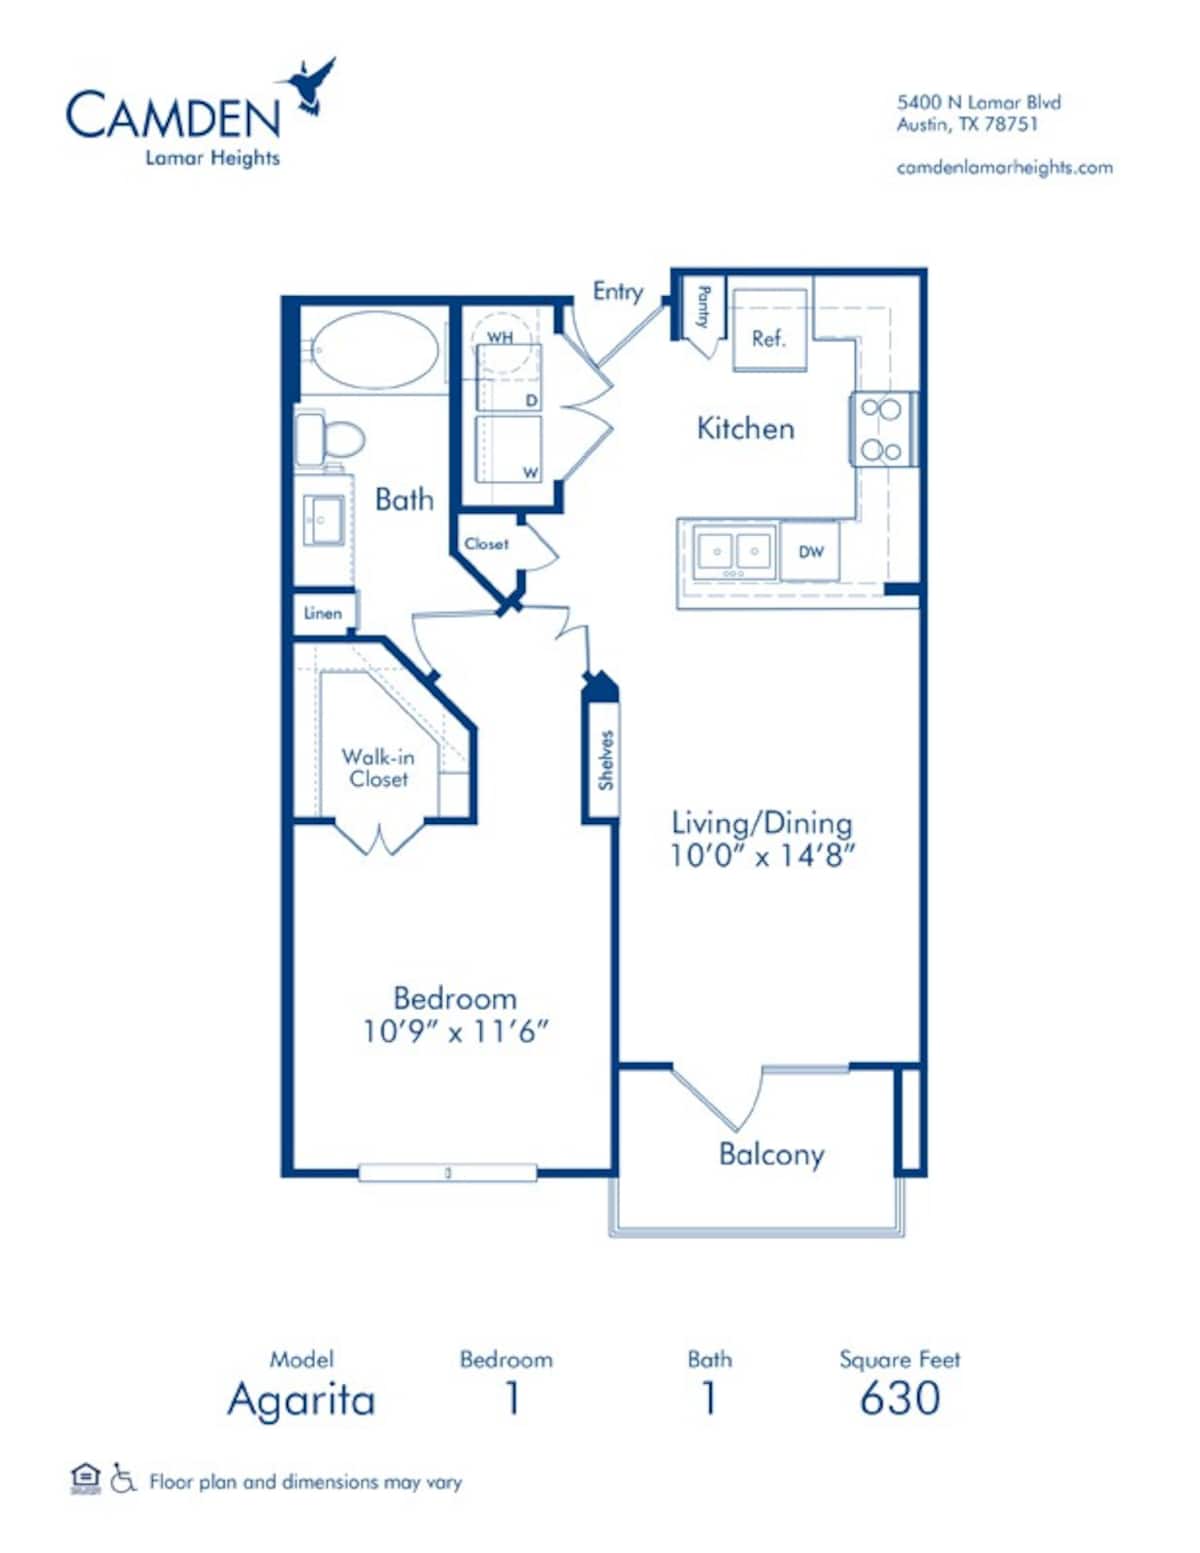 Floorplan diagram for Agarita, showing 1 bedroom